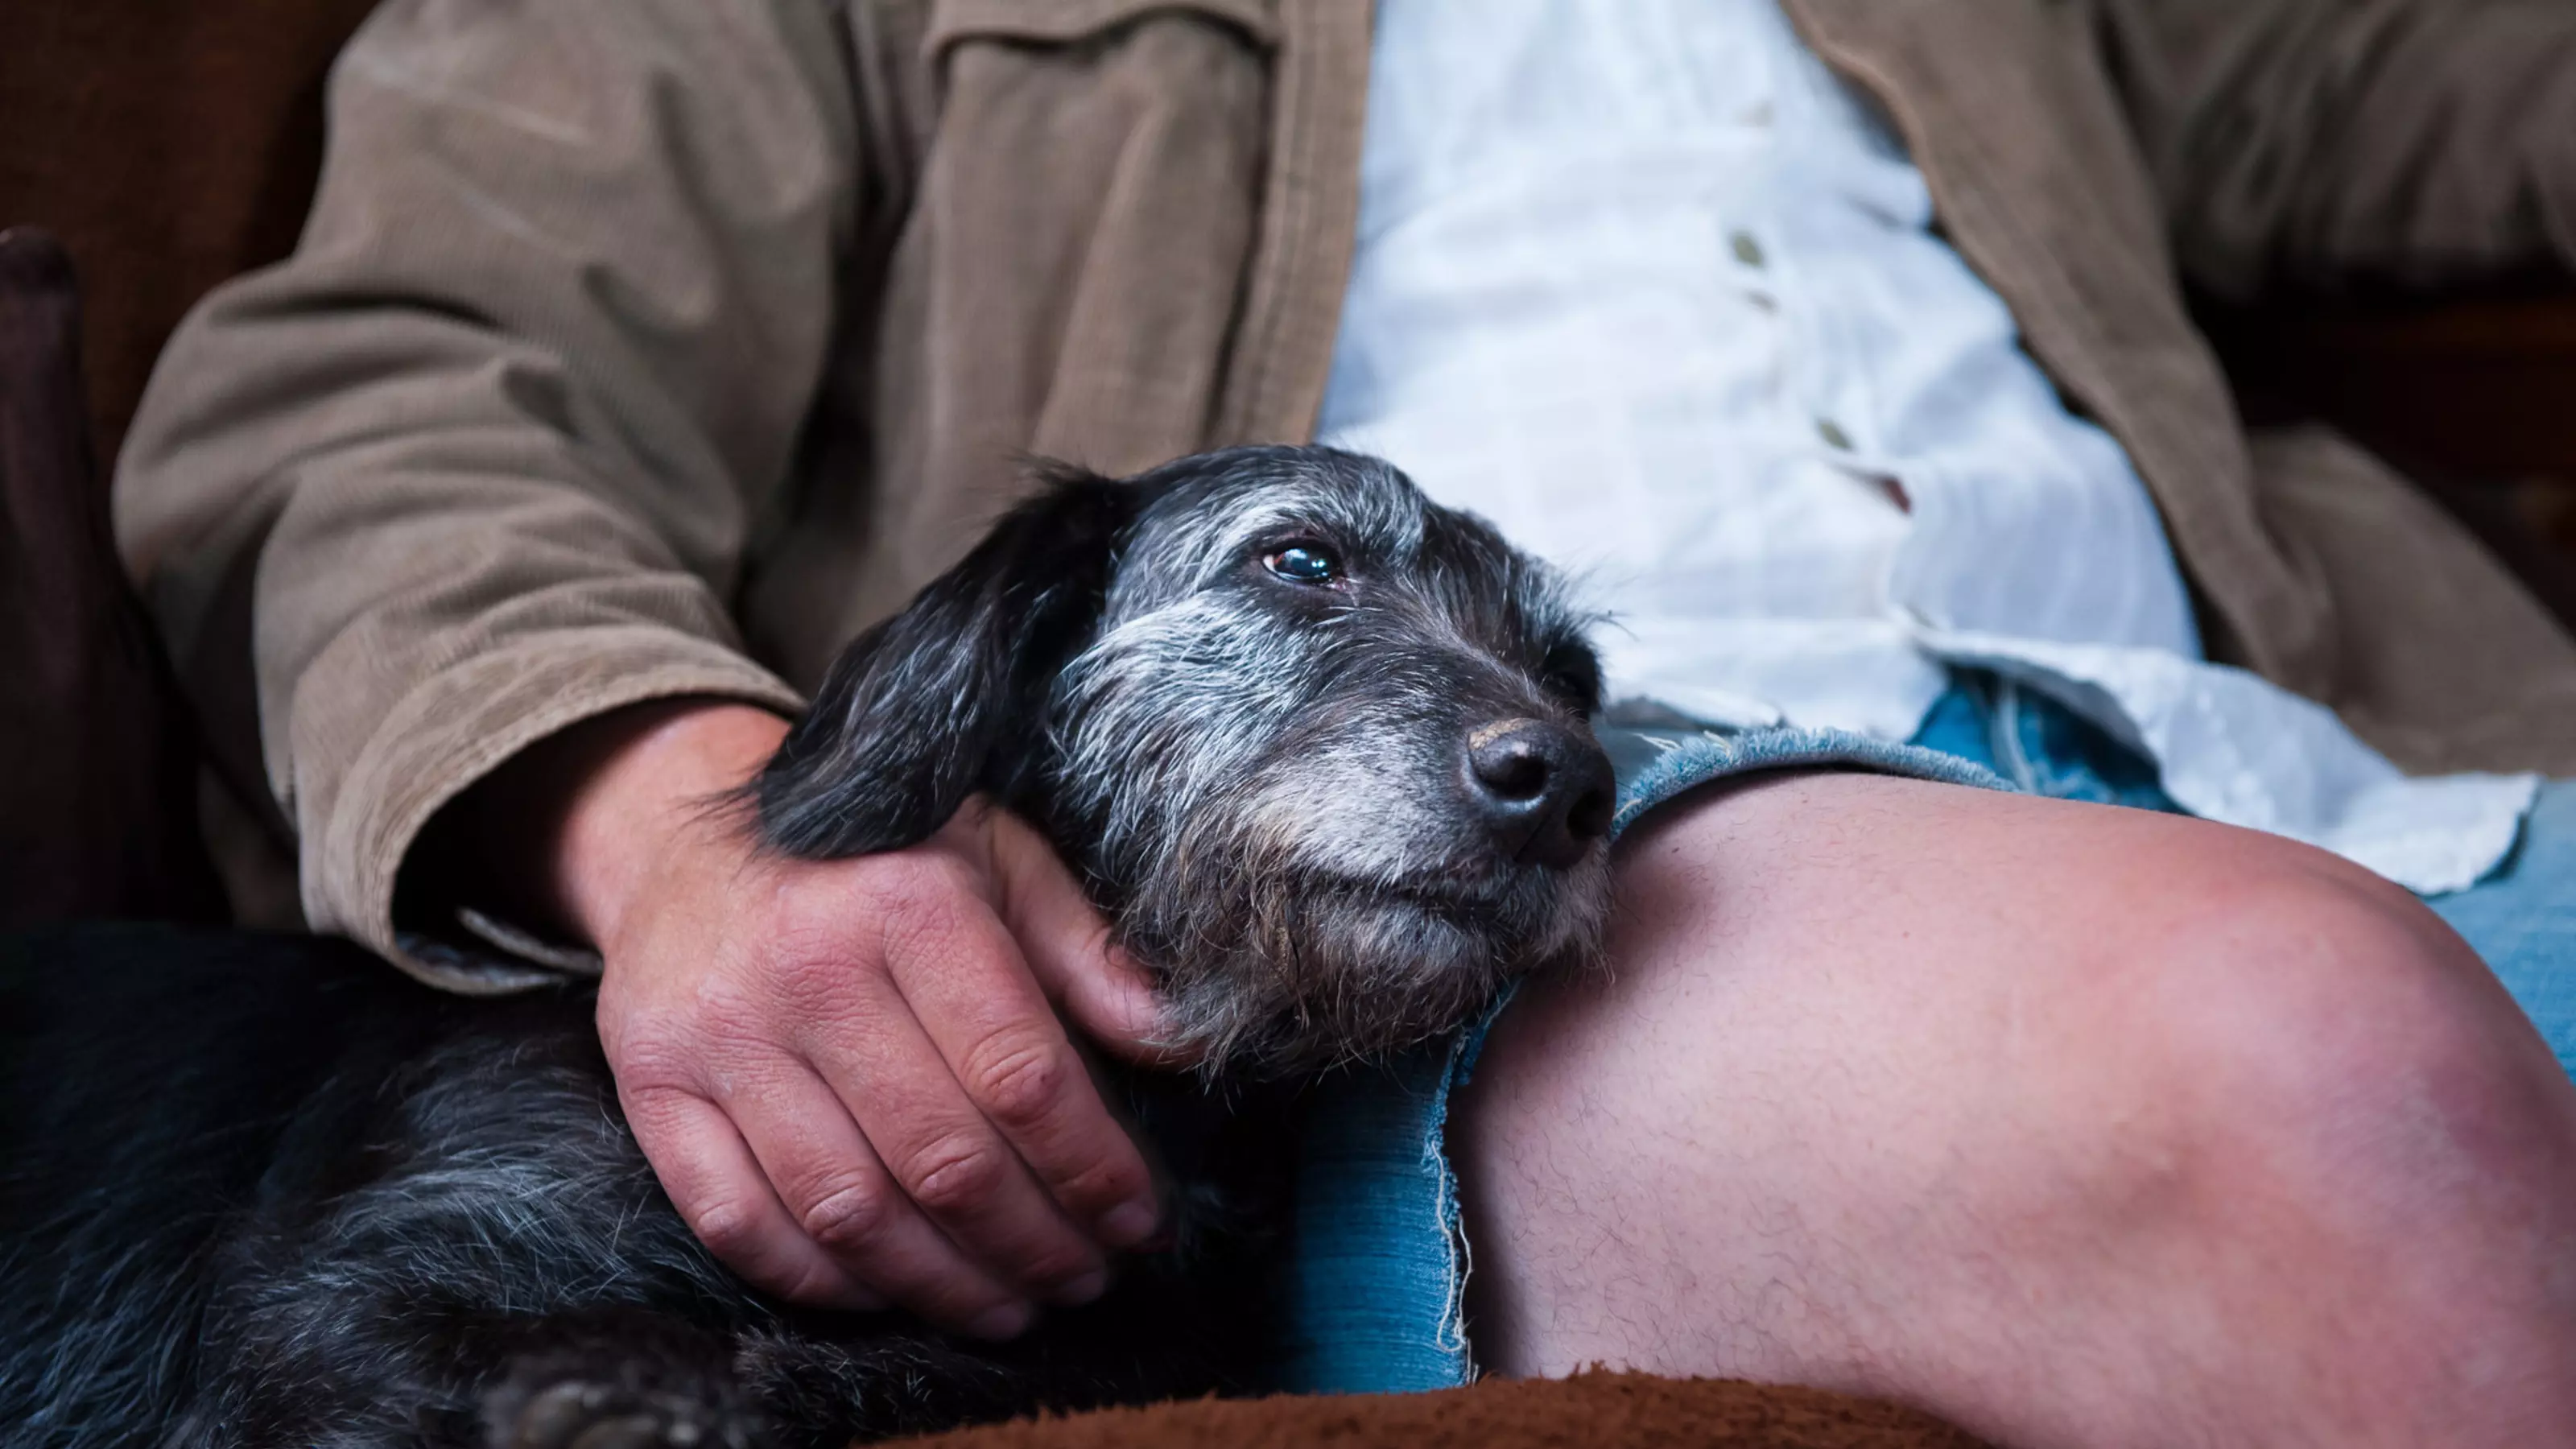 Bedlington terrier cross Brandy with her new owner